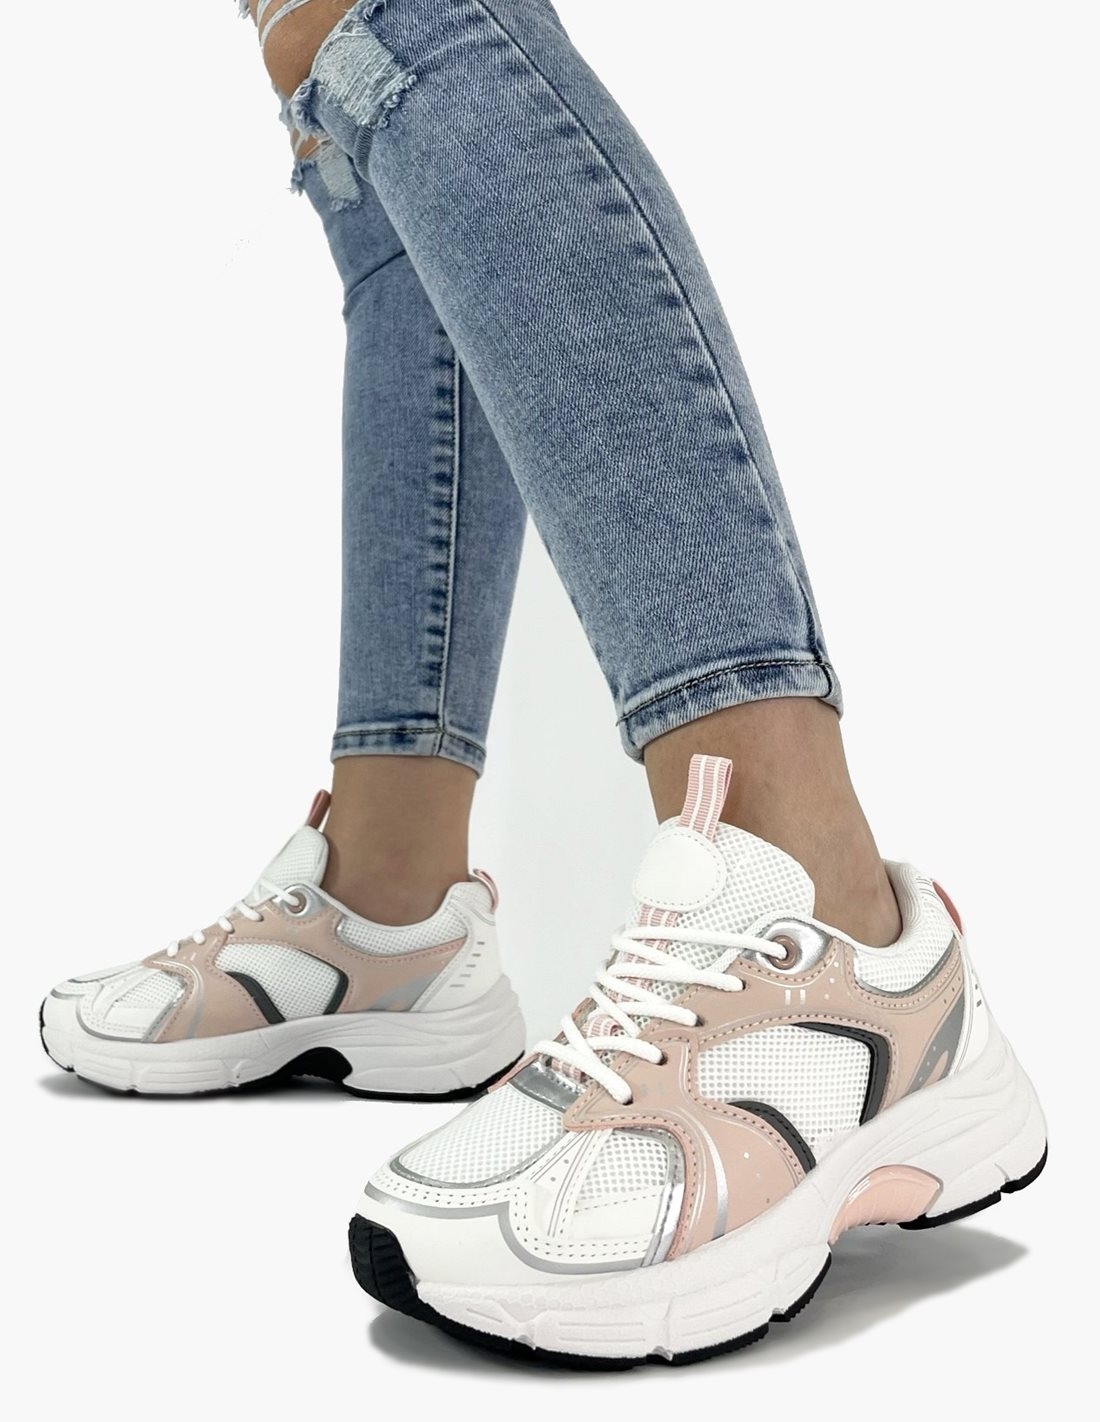 Calzado de mujer, Tus Zapatos online en Calzados Plaza